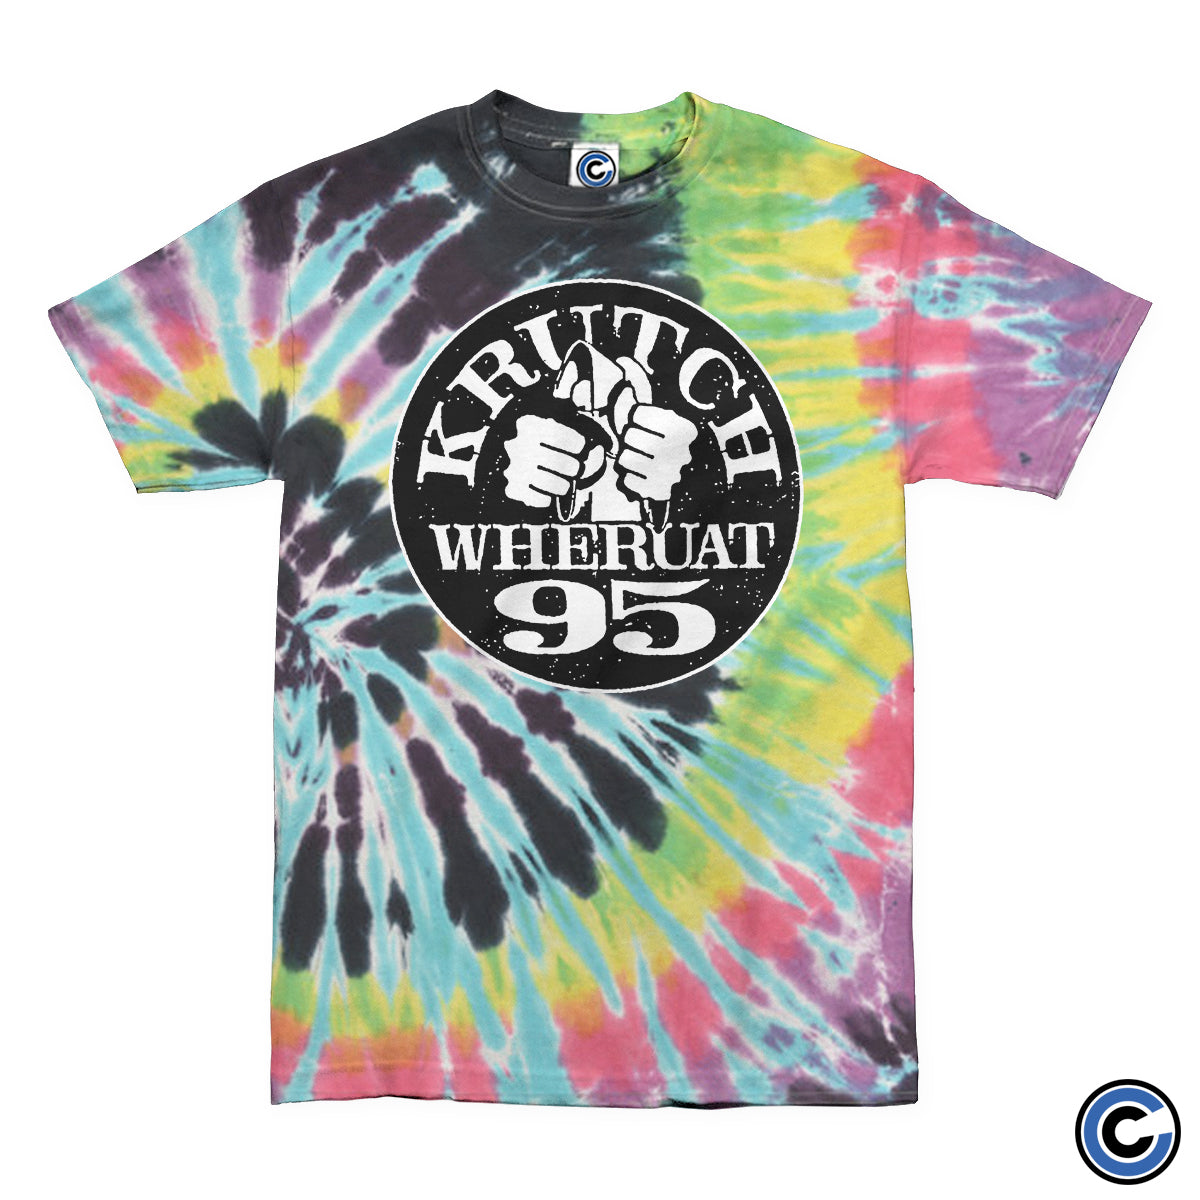 Krutch "Wheruat 2 Color" Shirt